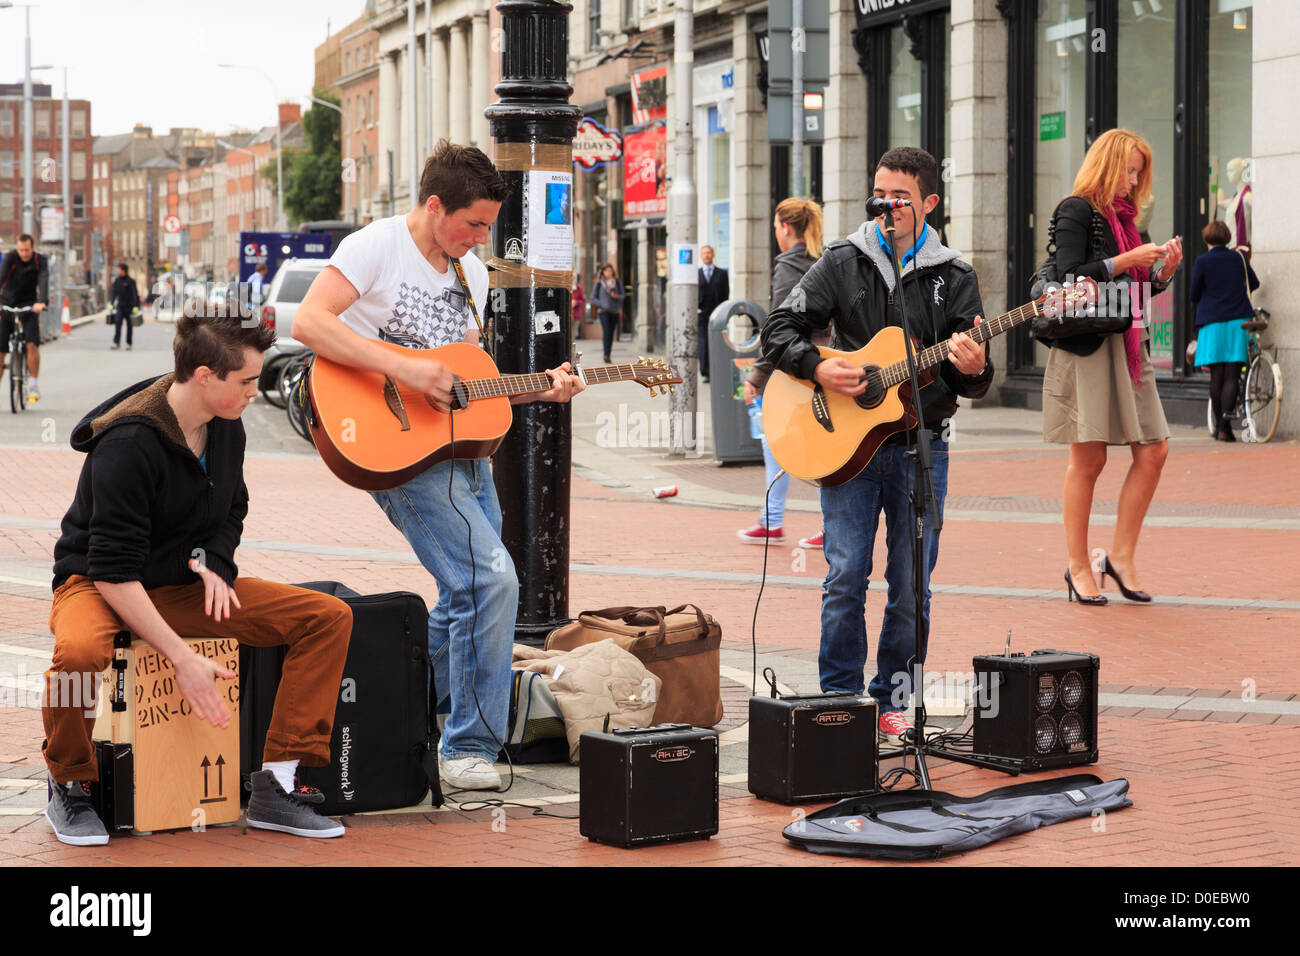 Typical street scene with three Irish musicians playing guitars busking in city centre on Grafton Street Dublin Ireland Eire Stock Photo